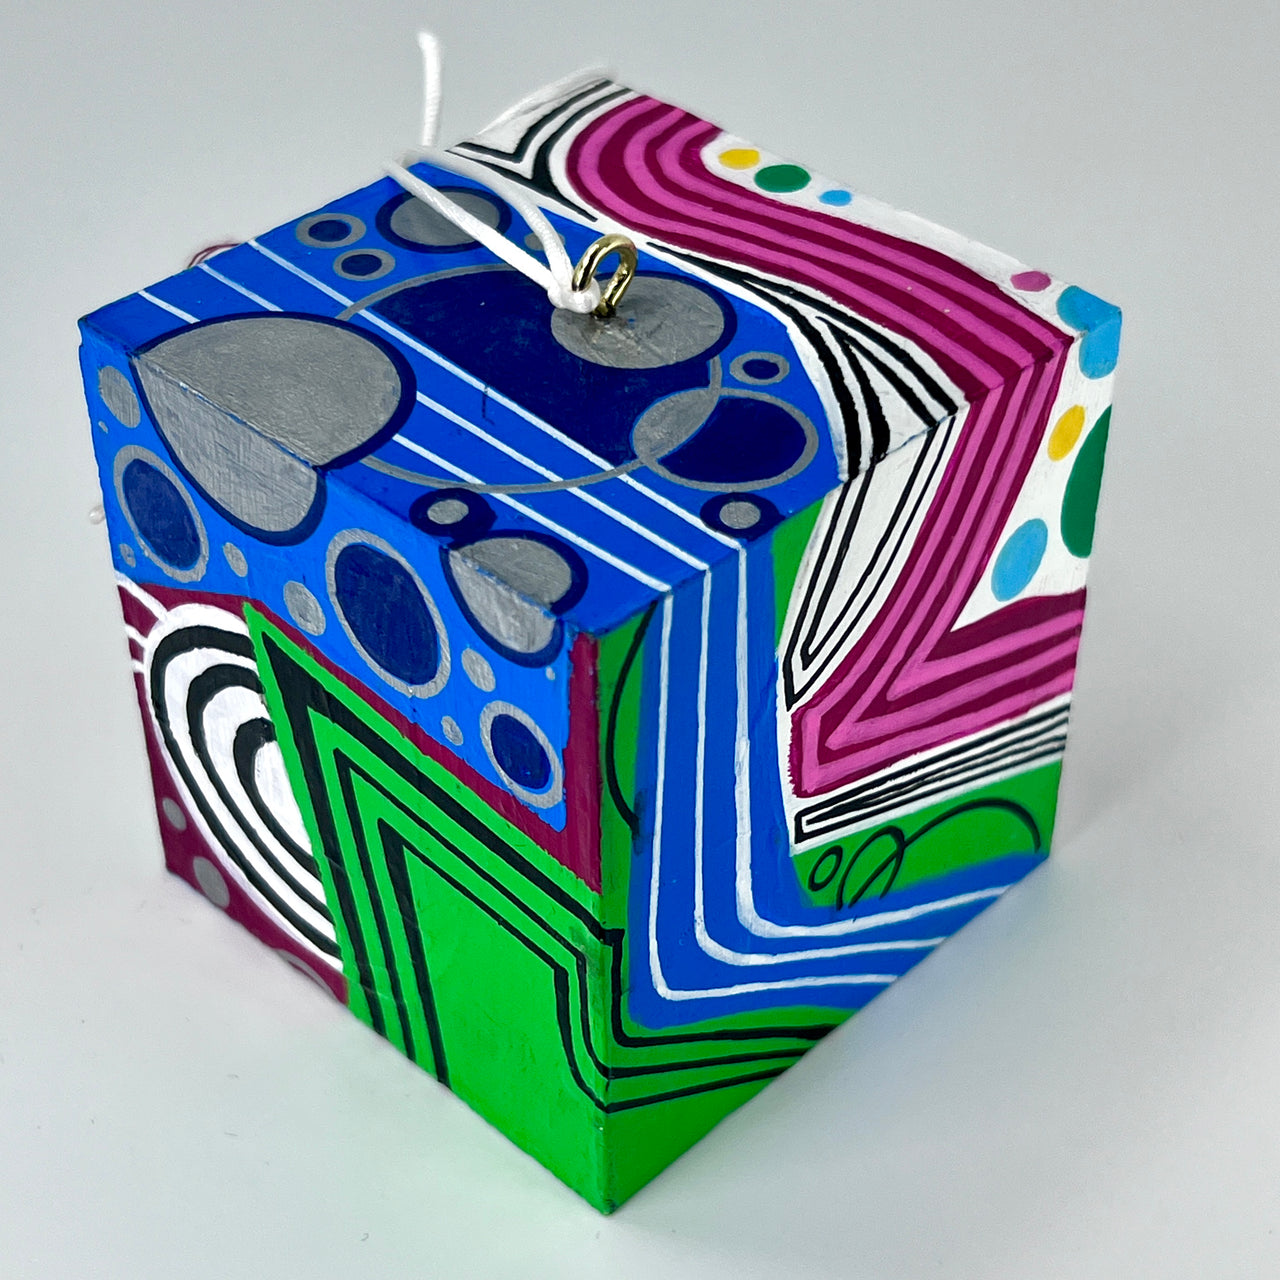 #21 - 3D Cube Art - 2.25" cube